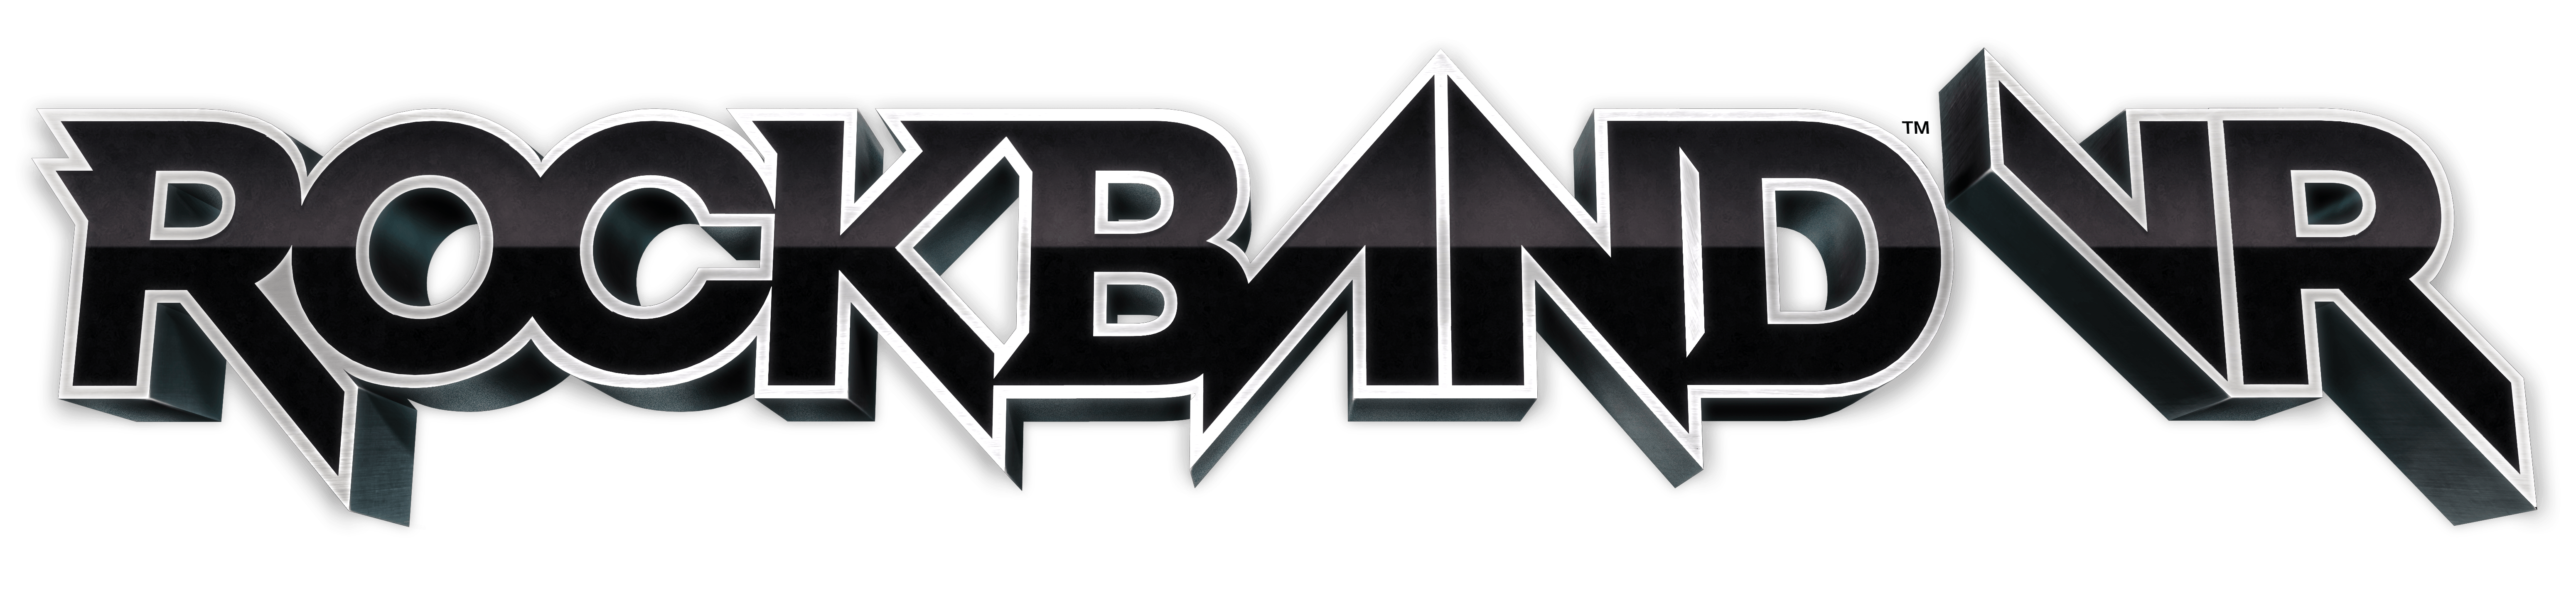 Rock Band Game Logo - Harmonix Music Systems